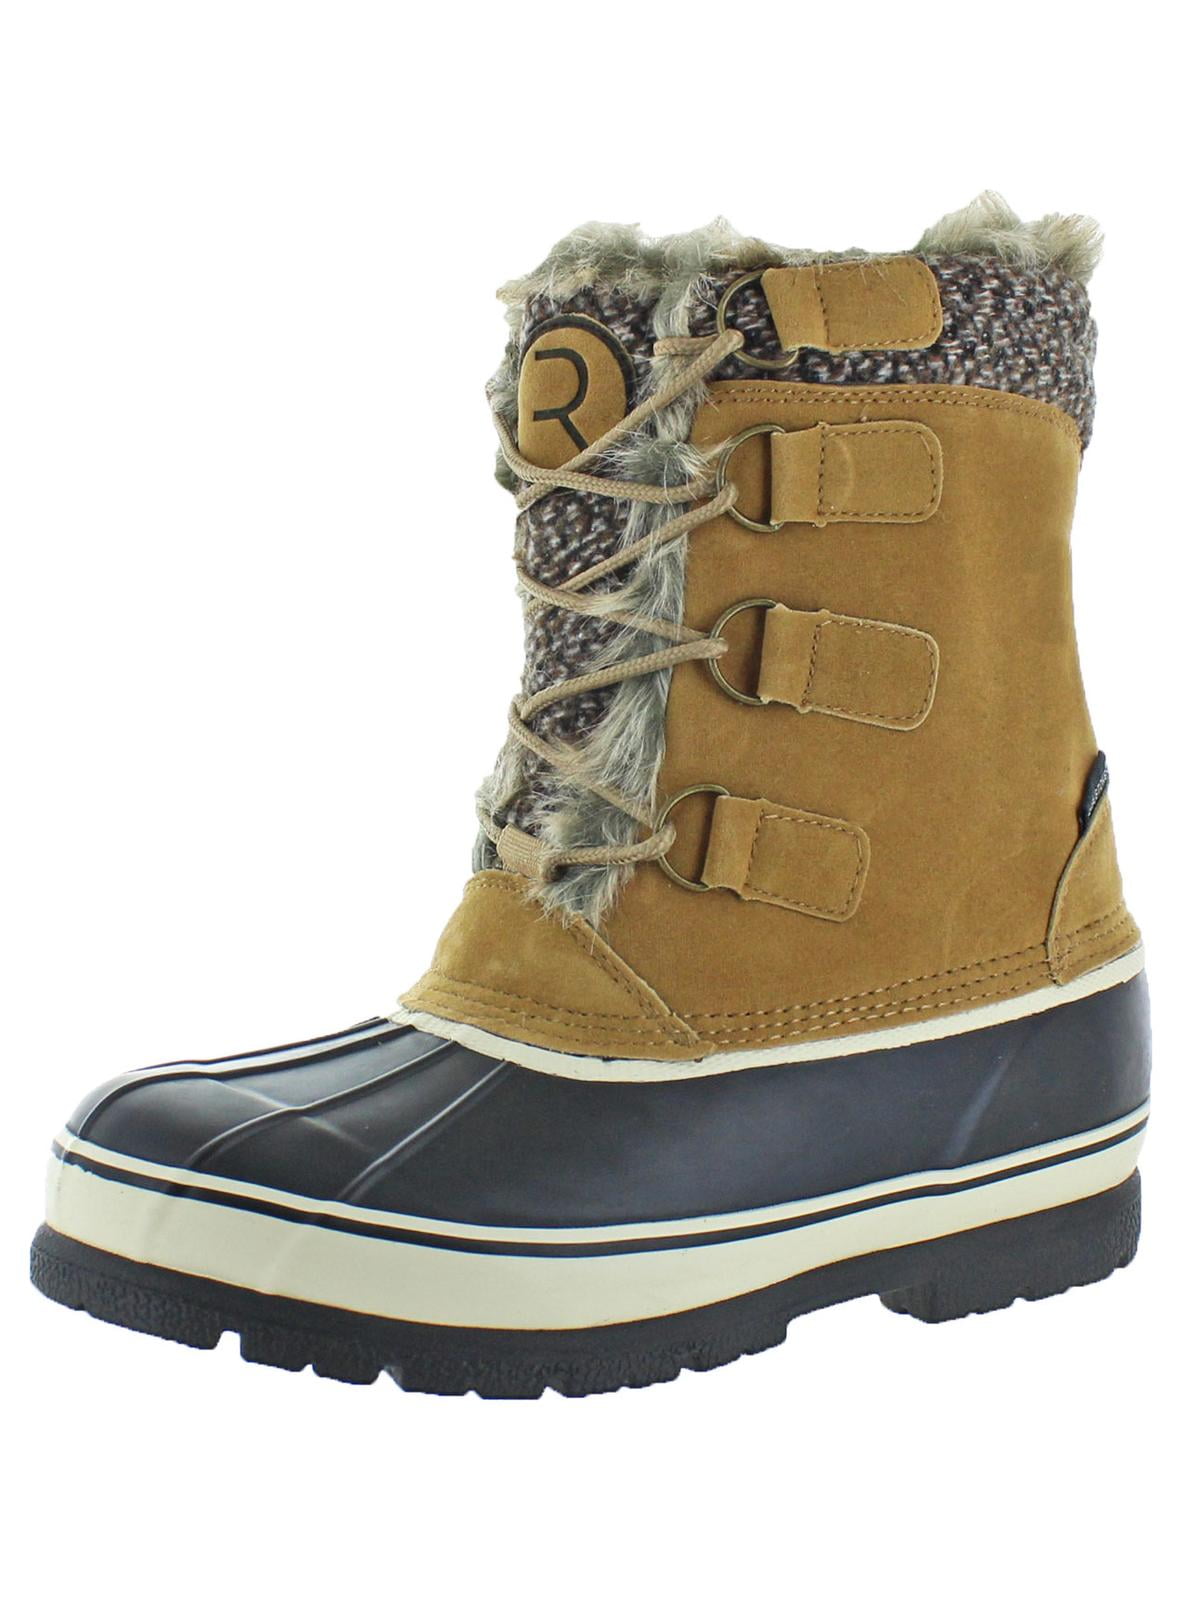 Revelstoke - Revelstoke Mens Selkirk Duck Toe Outdoor Snow Boots